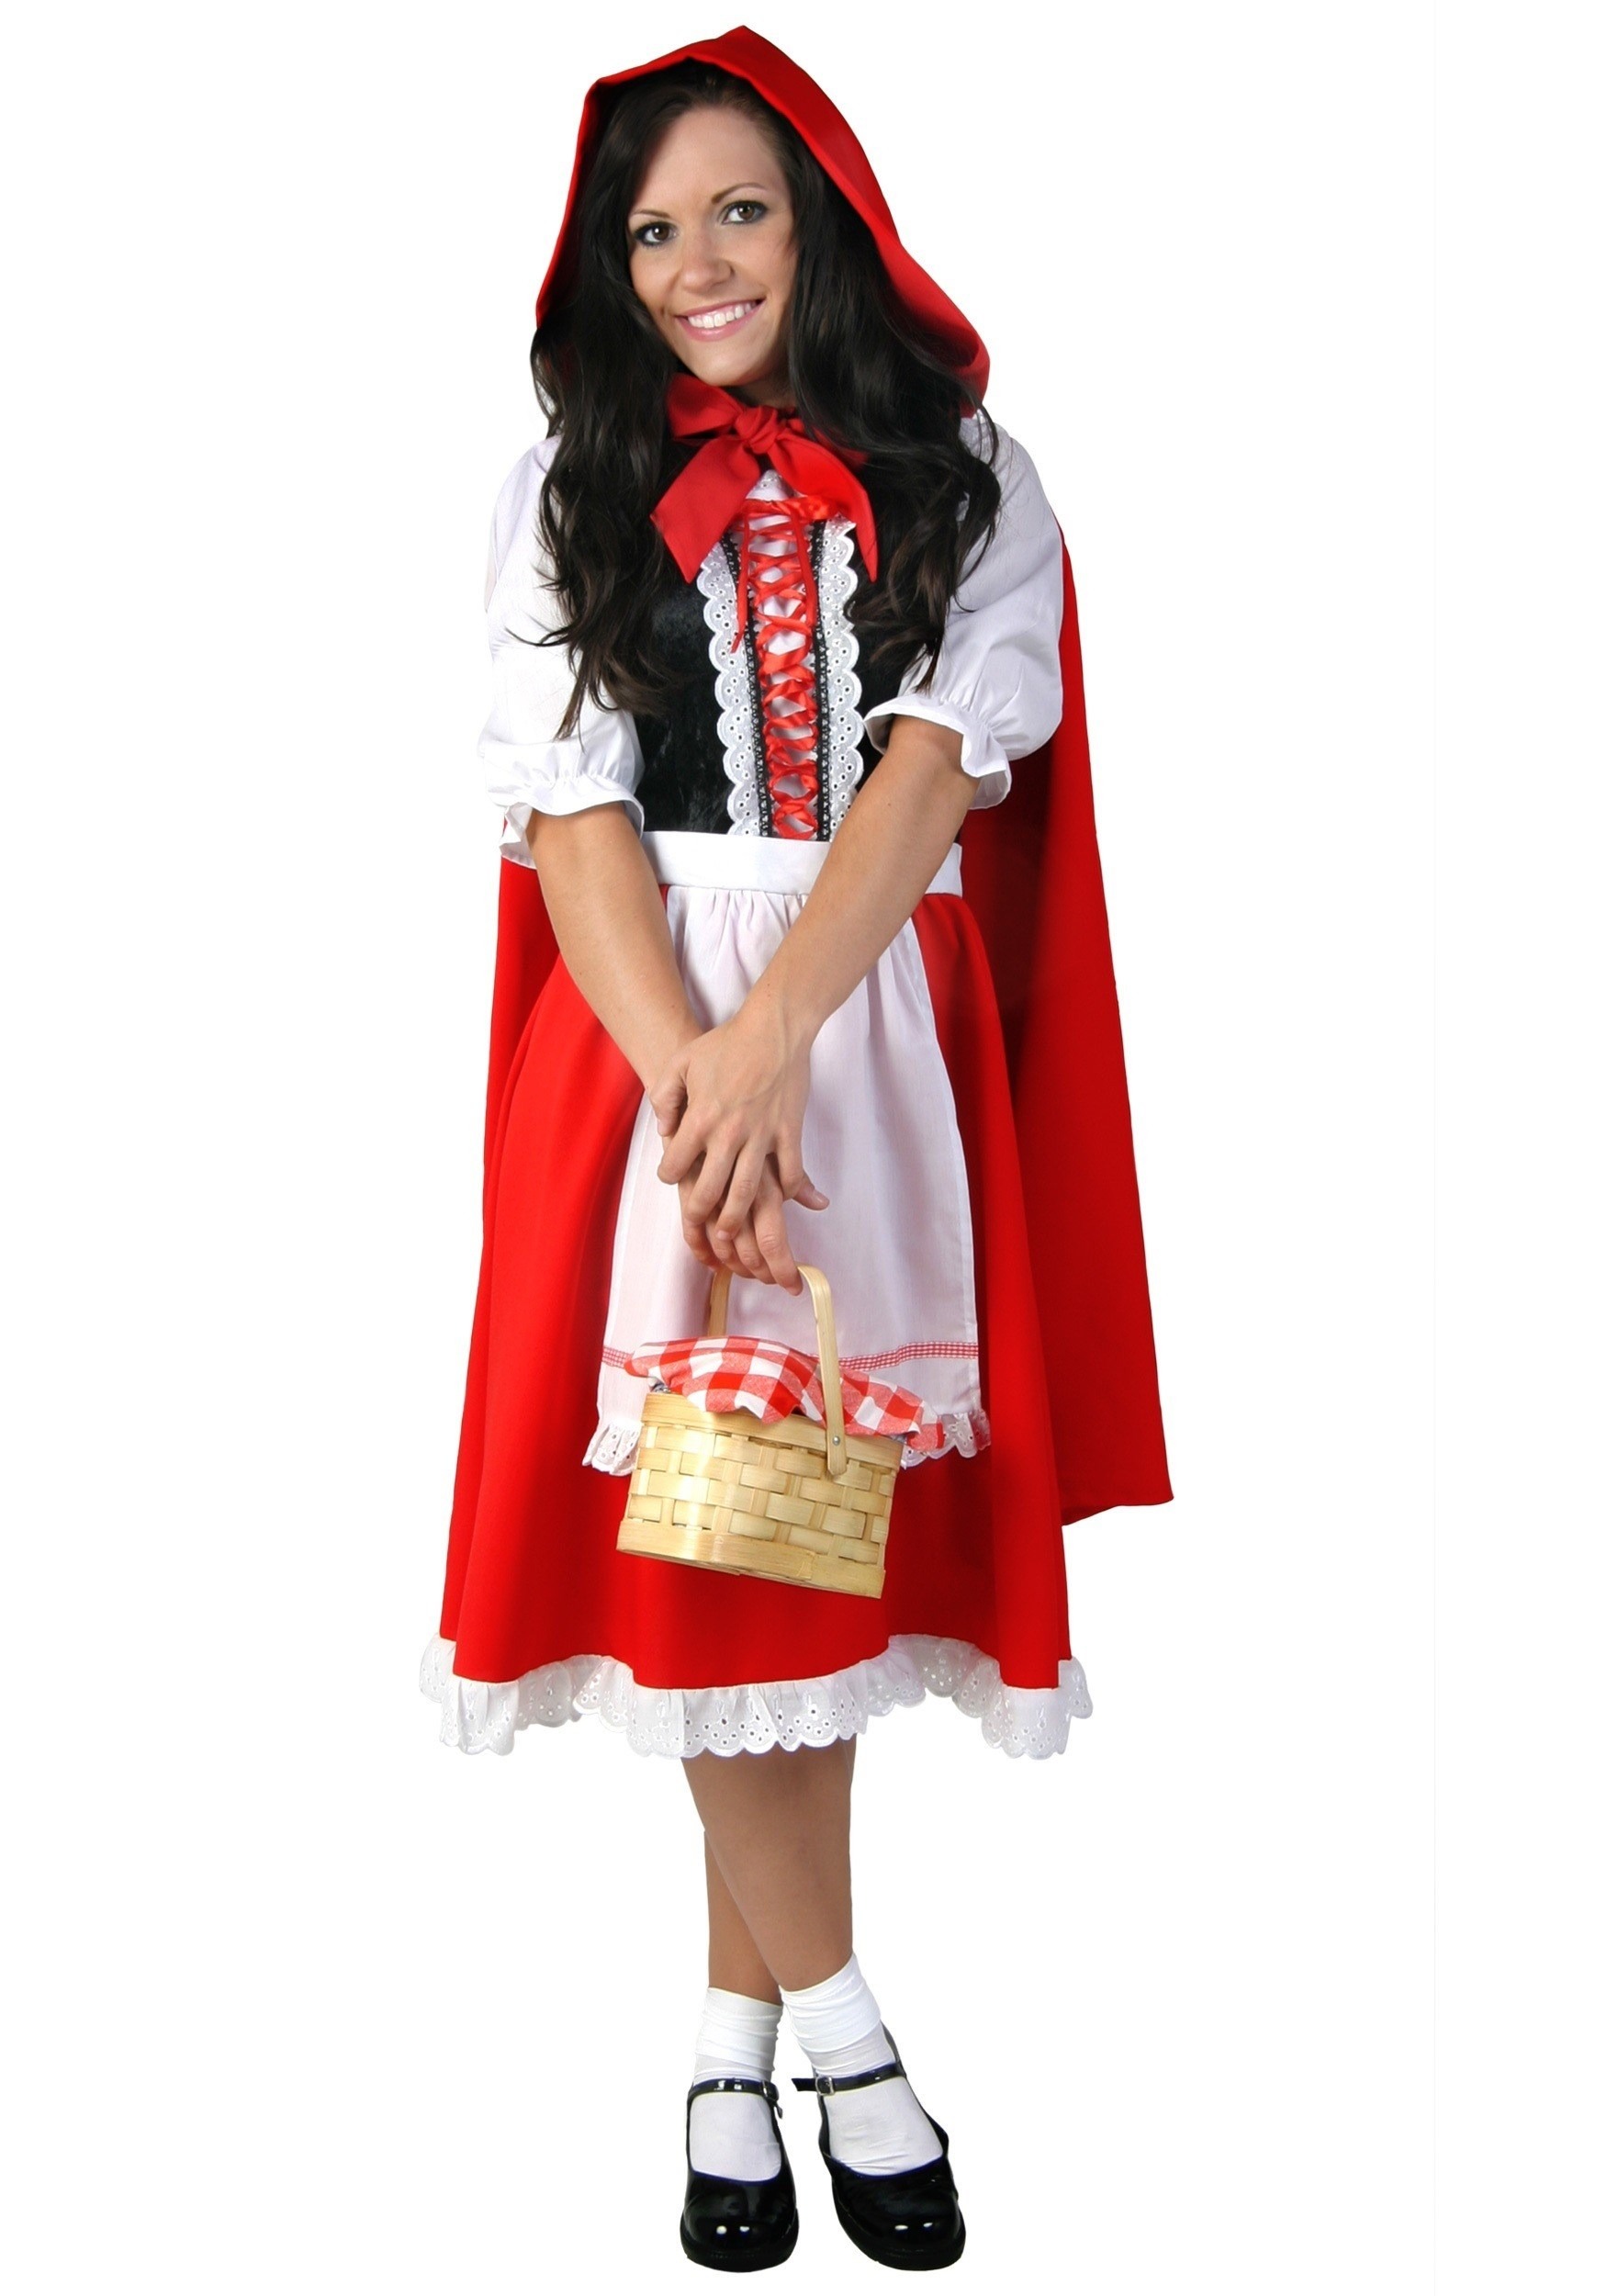 Photos - Fancy Dress Winsun Dress FUN Costumes Women's Plus Size Red Riding Hood Costume Dress Red/White 